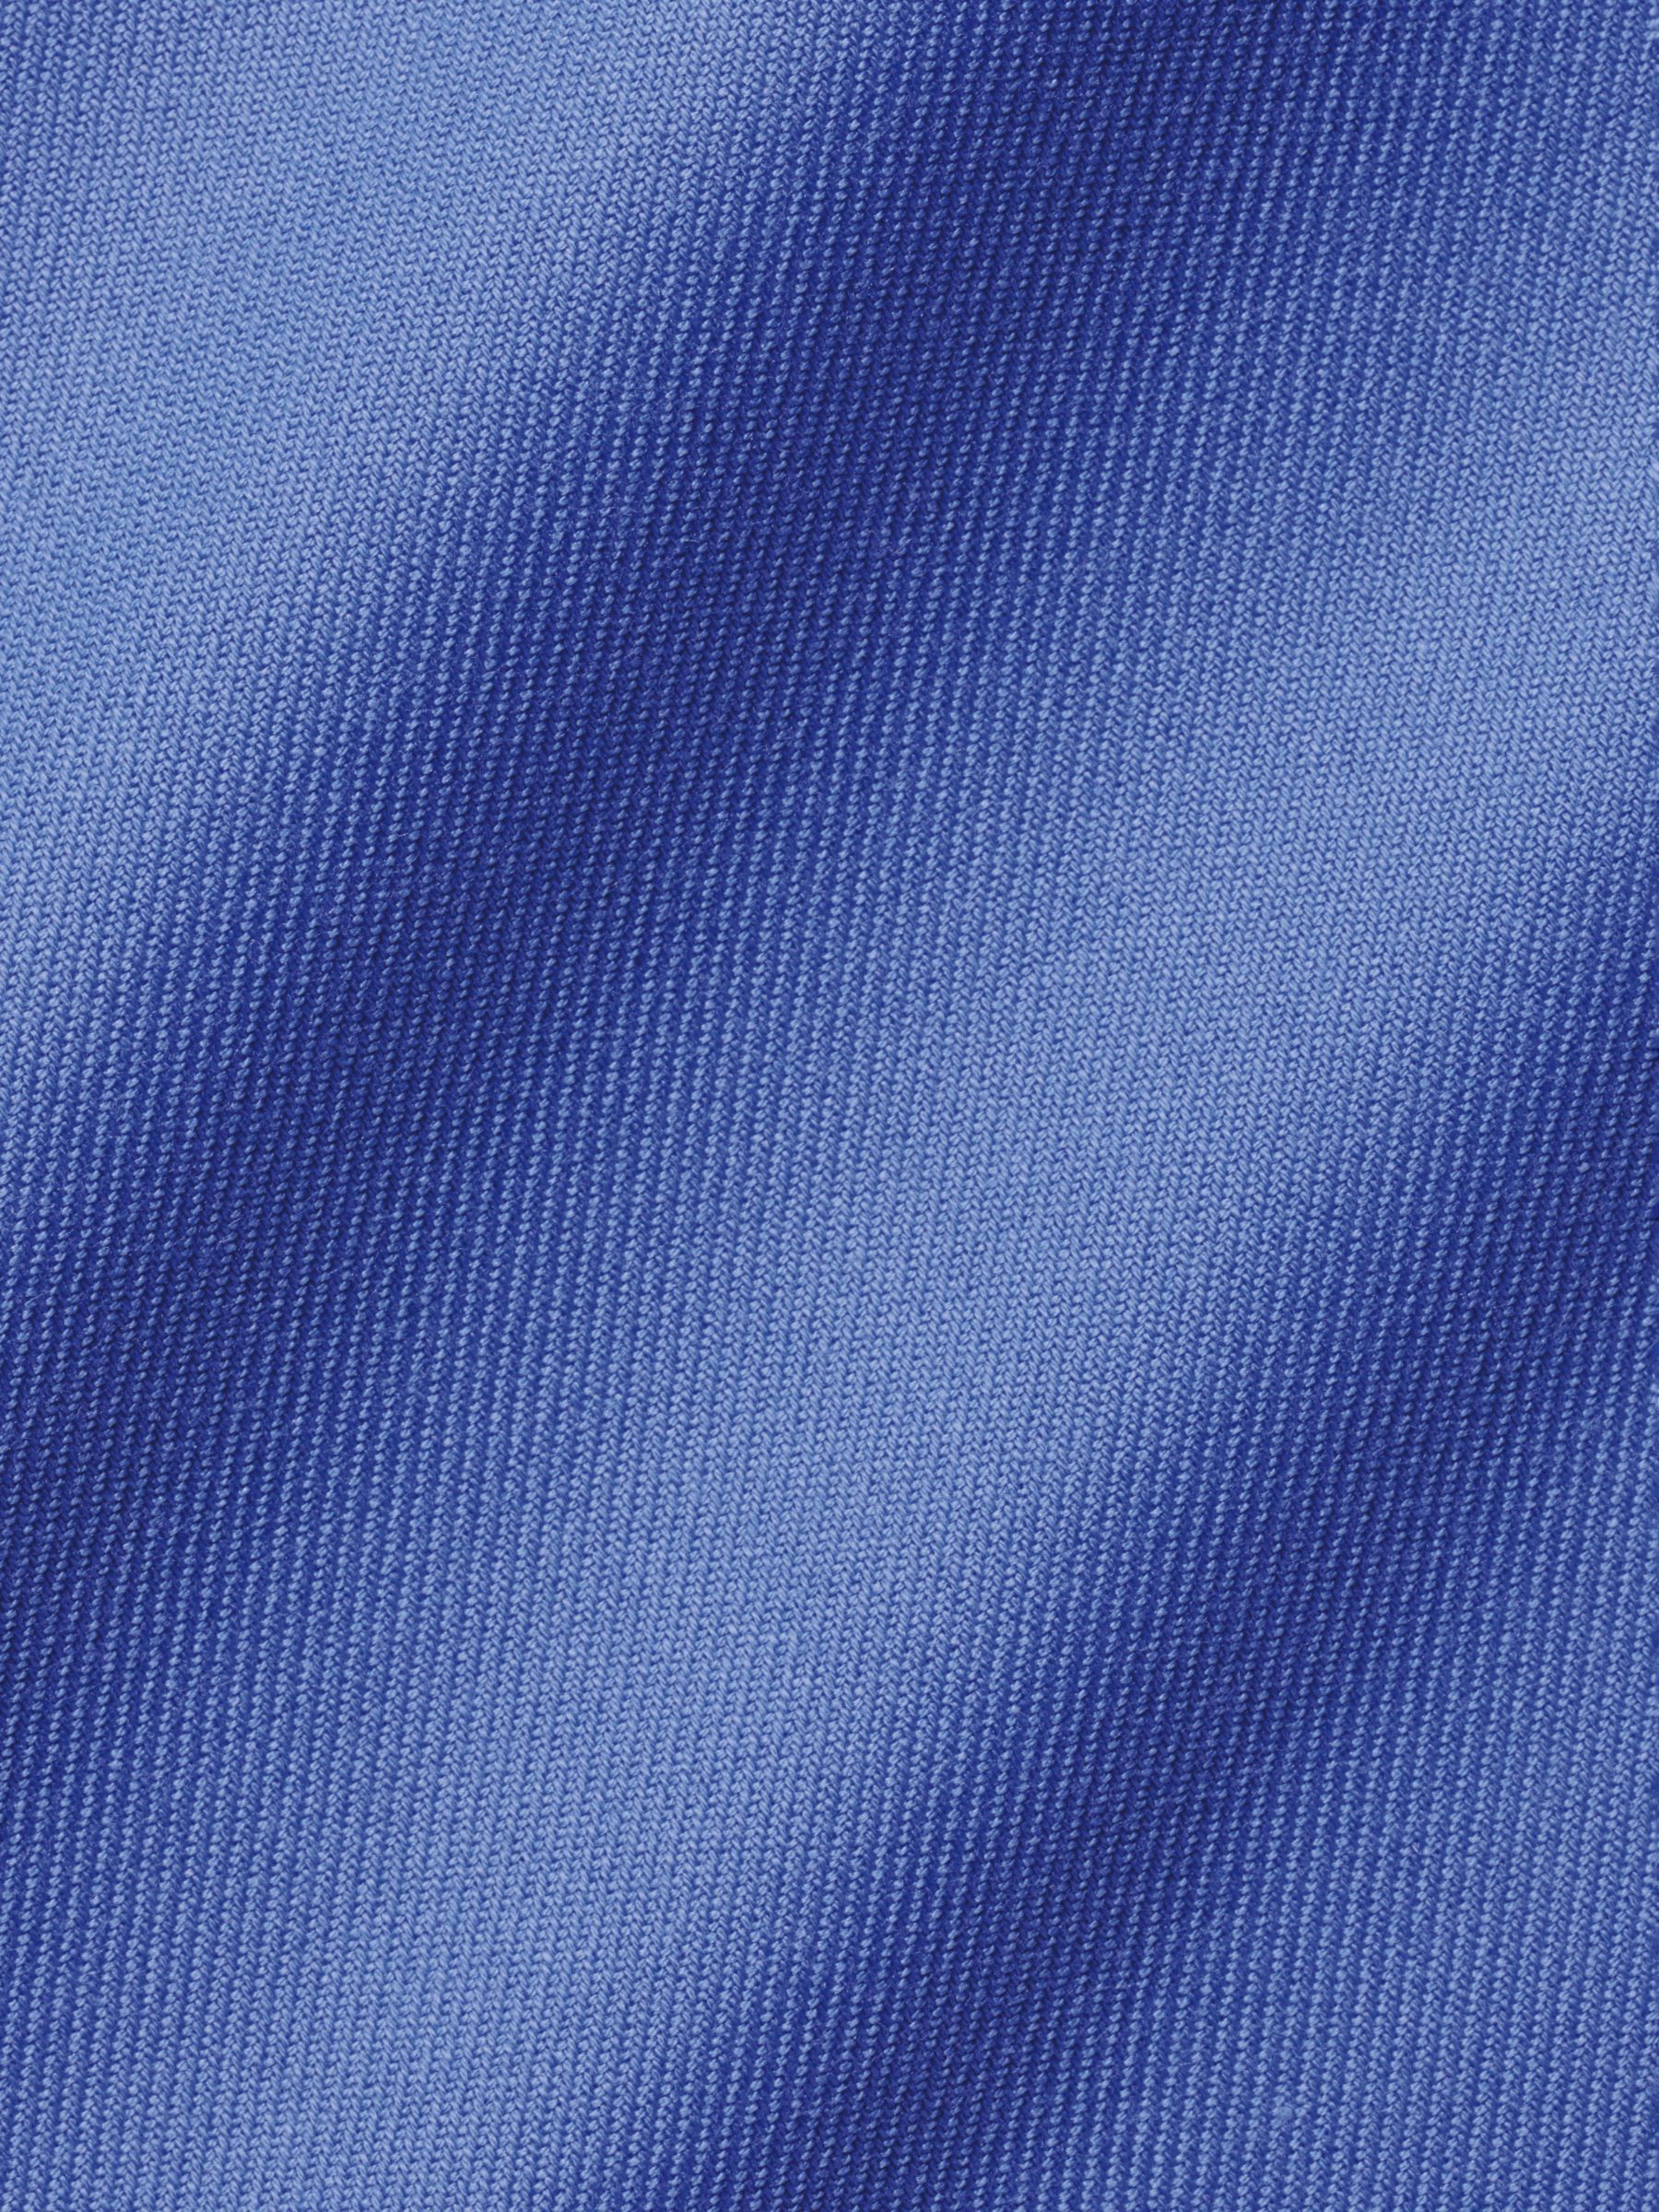 Charles Tyrwhitt Non-Iron Twill Shirt, Ocean Blue, 17